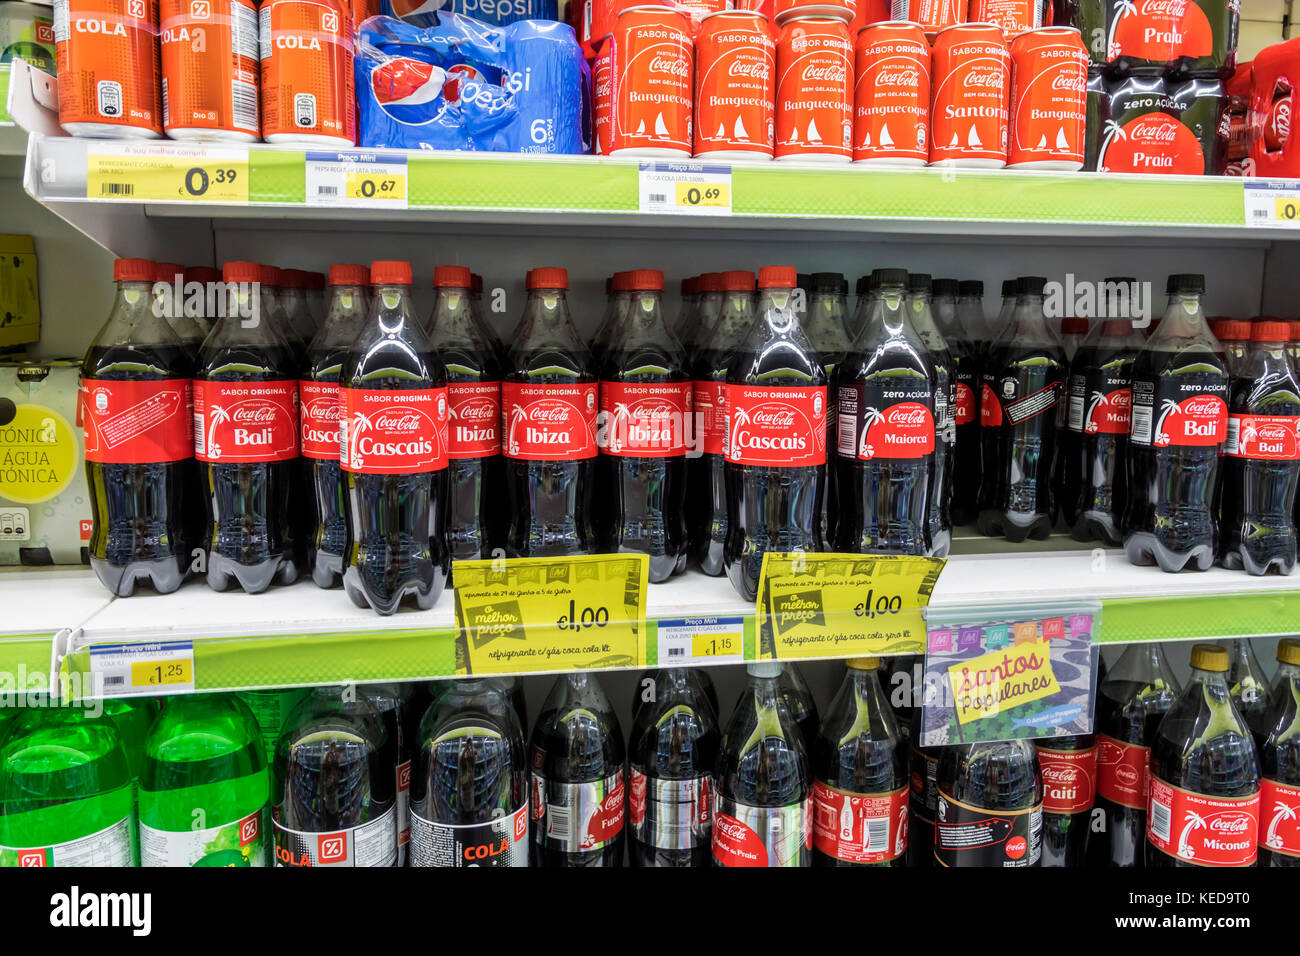 Lisbon Portugal,Supermercado Minipreco,Rua Alexandre Herculano,supermarket,grocery store,shelf shelves,soda,Coca Cola,Coke,soft drink drinks bottle,ca Stock Photo